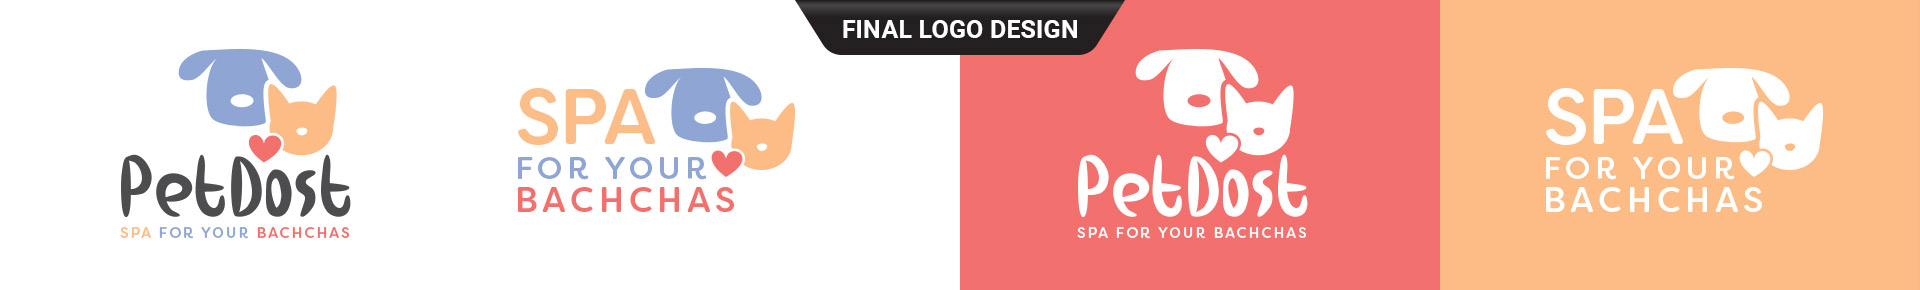 TBD-PetDost-Final-Logo-Design